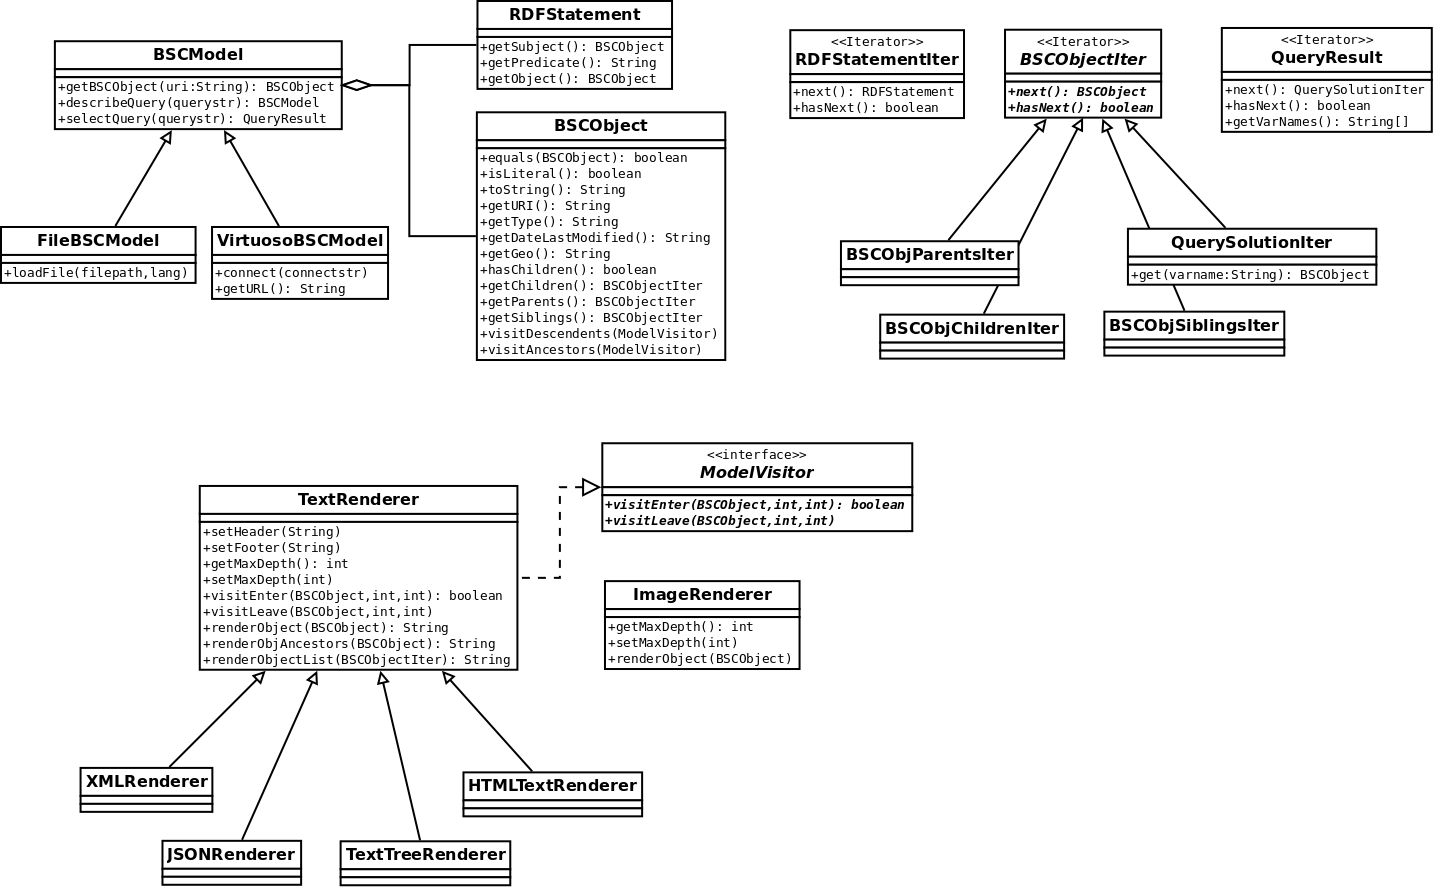 uml class diagram software